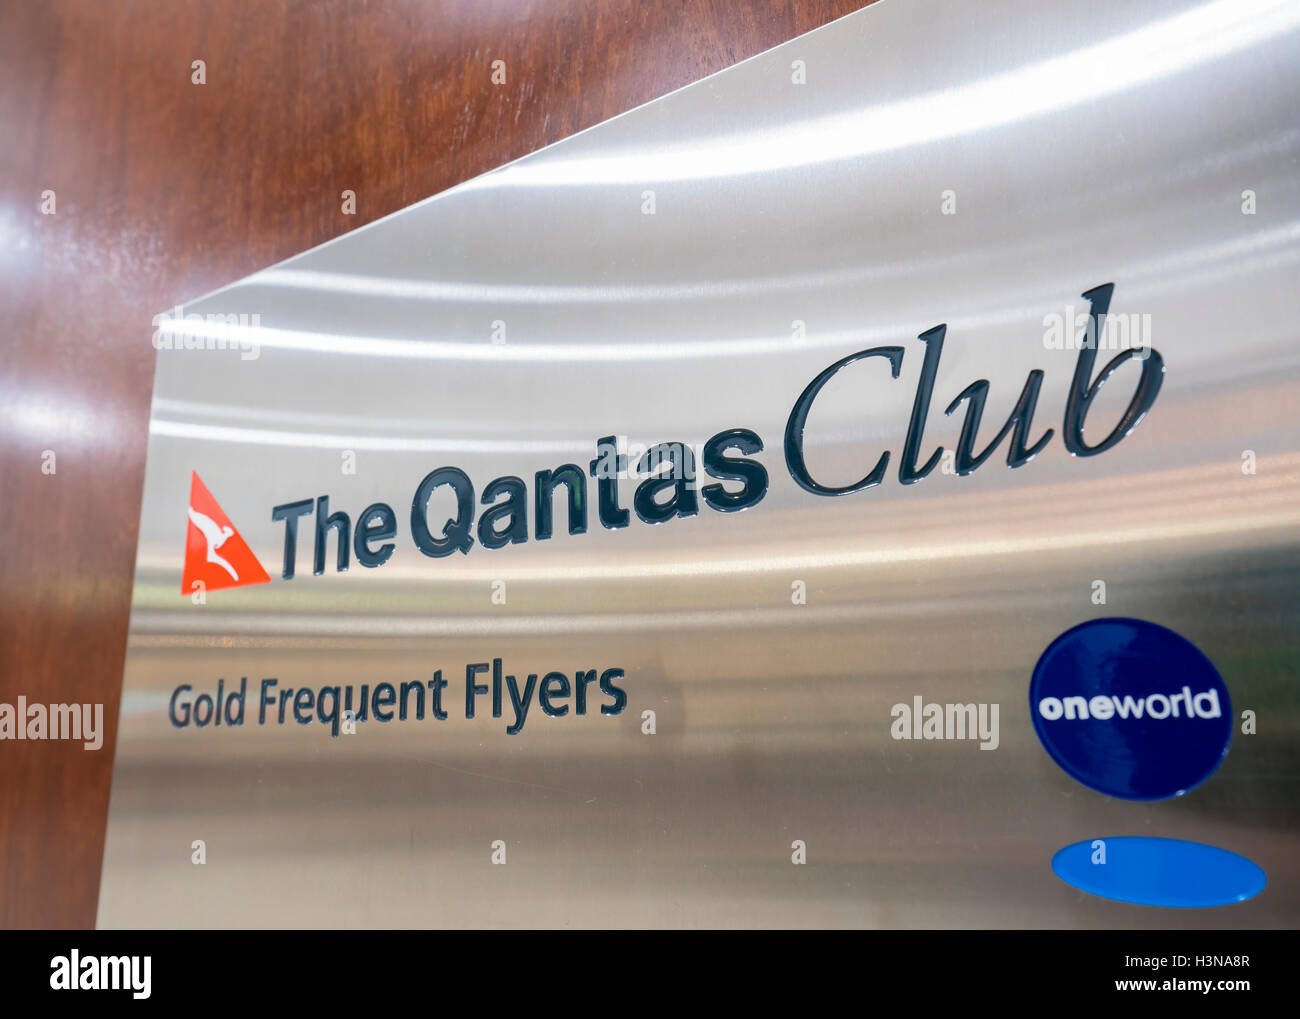 Close-up of The Qantas Club signage Stock Photo